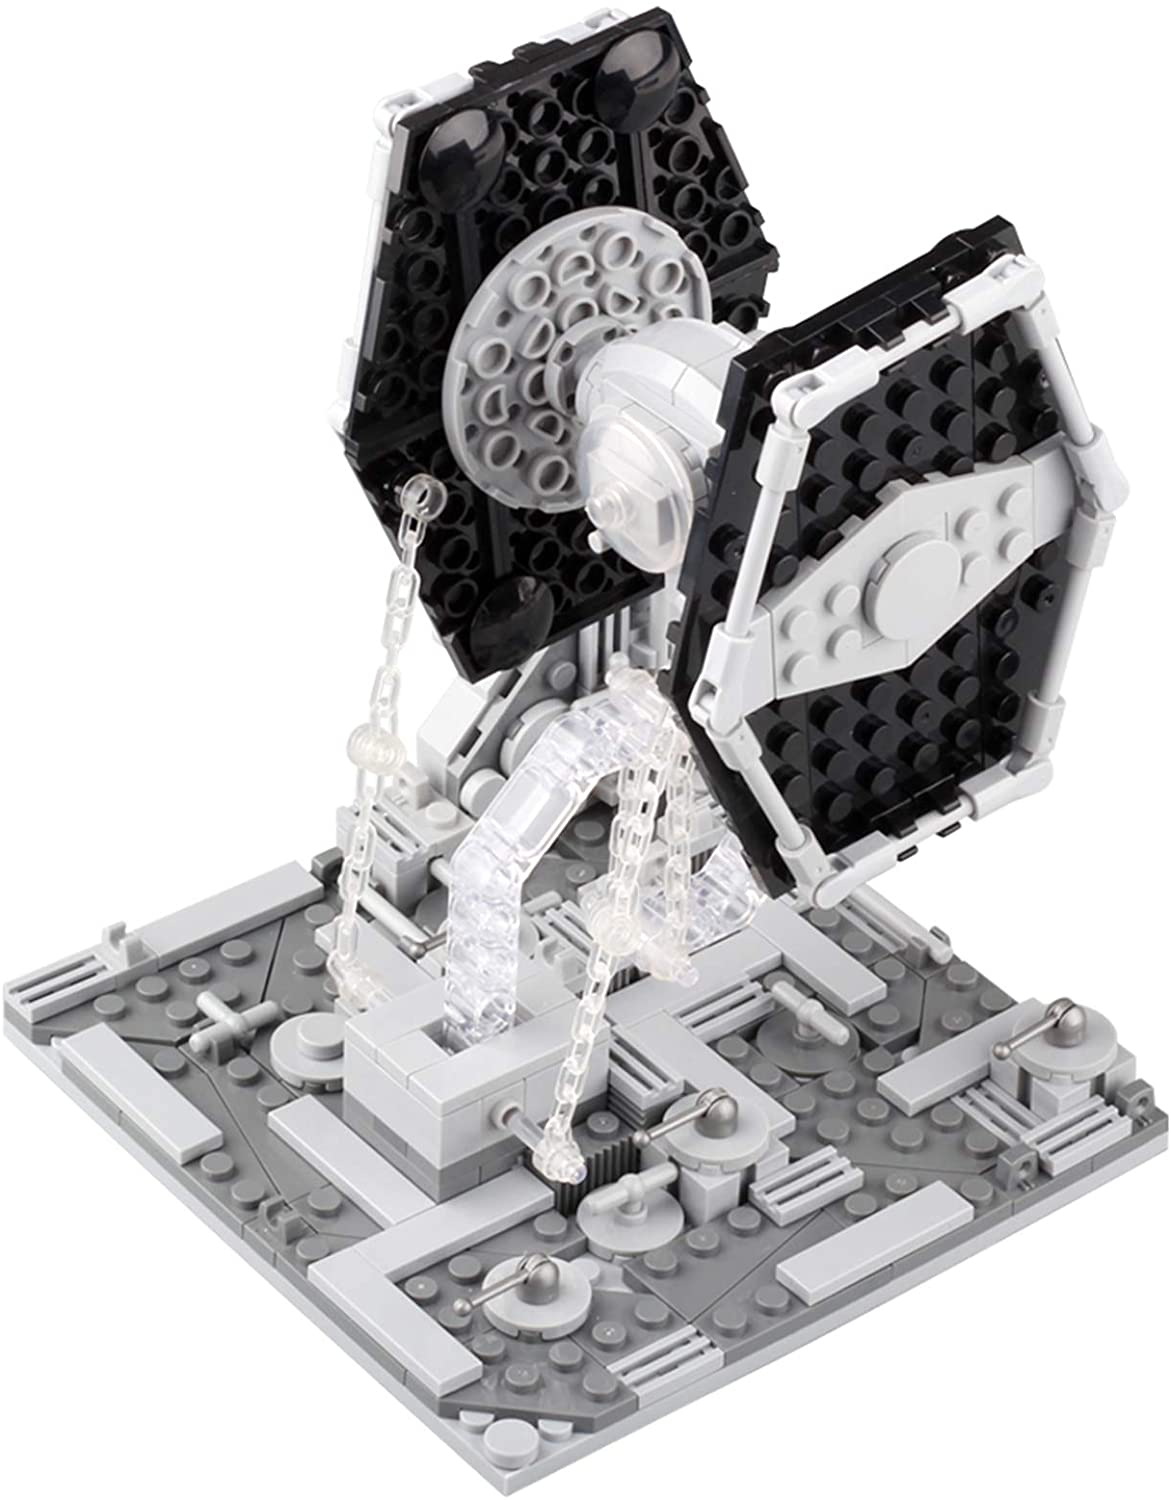 SW TIE Fighter Building Kit Lego Set 1